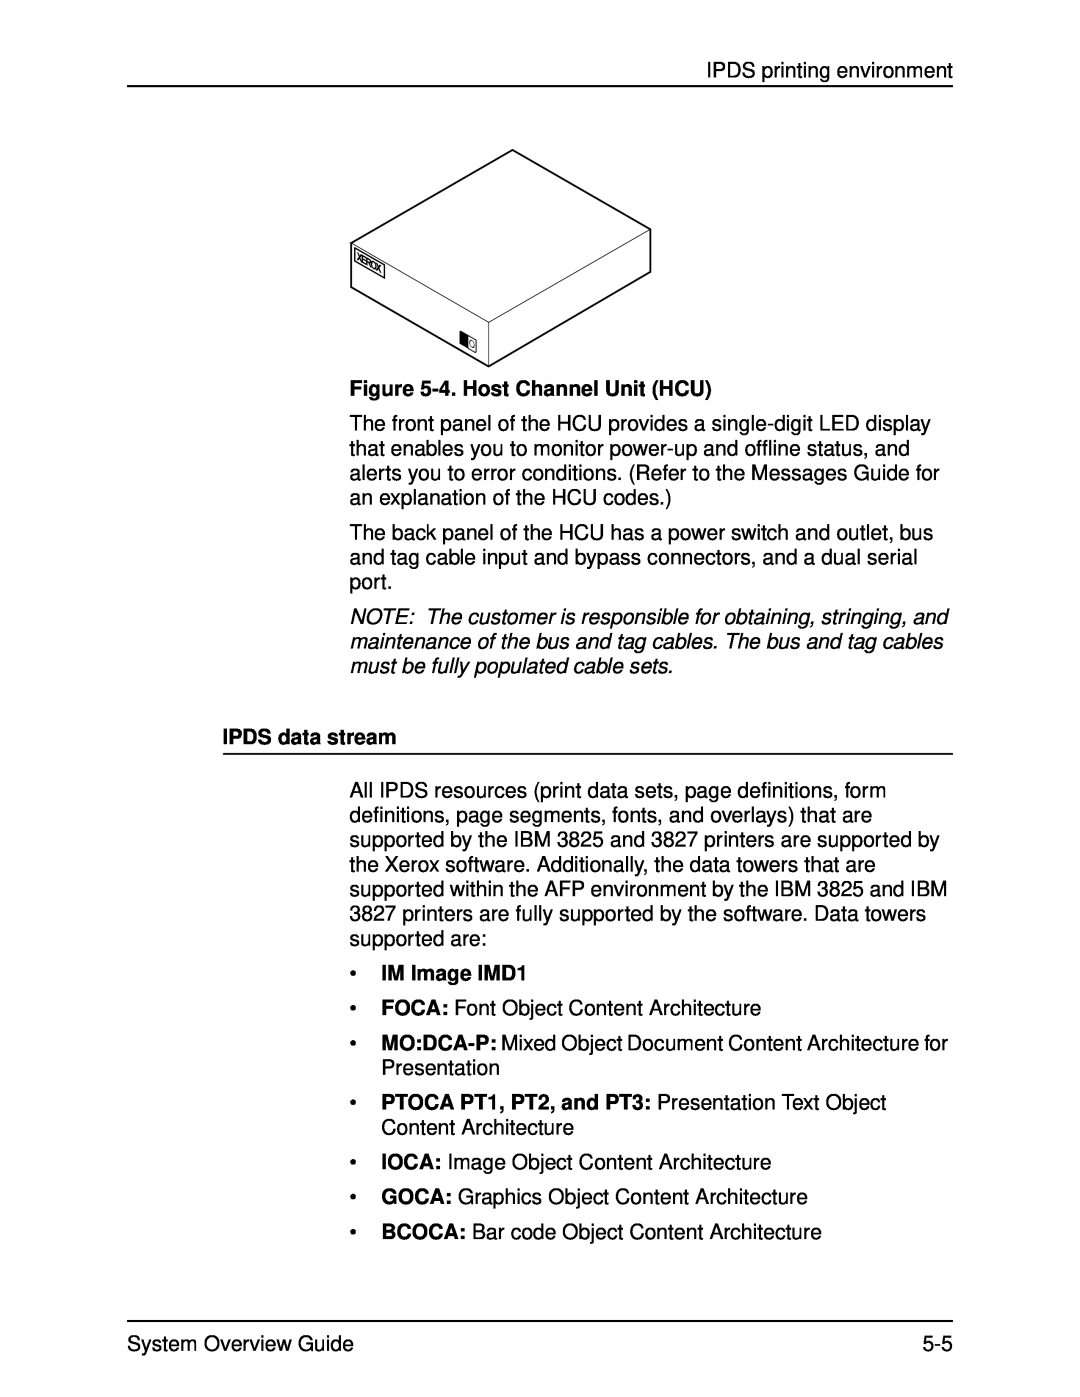 Xerox 4890, IPS, NPS, 4850, 92C manual 4.Host Channel Unit HCU, IPDS data stream, IM Image IMD1 